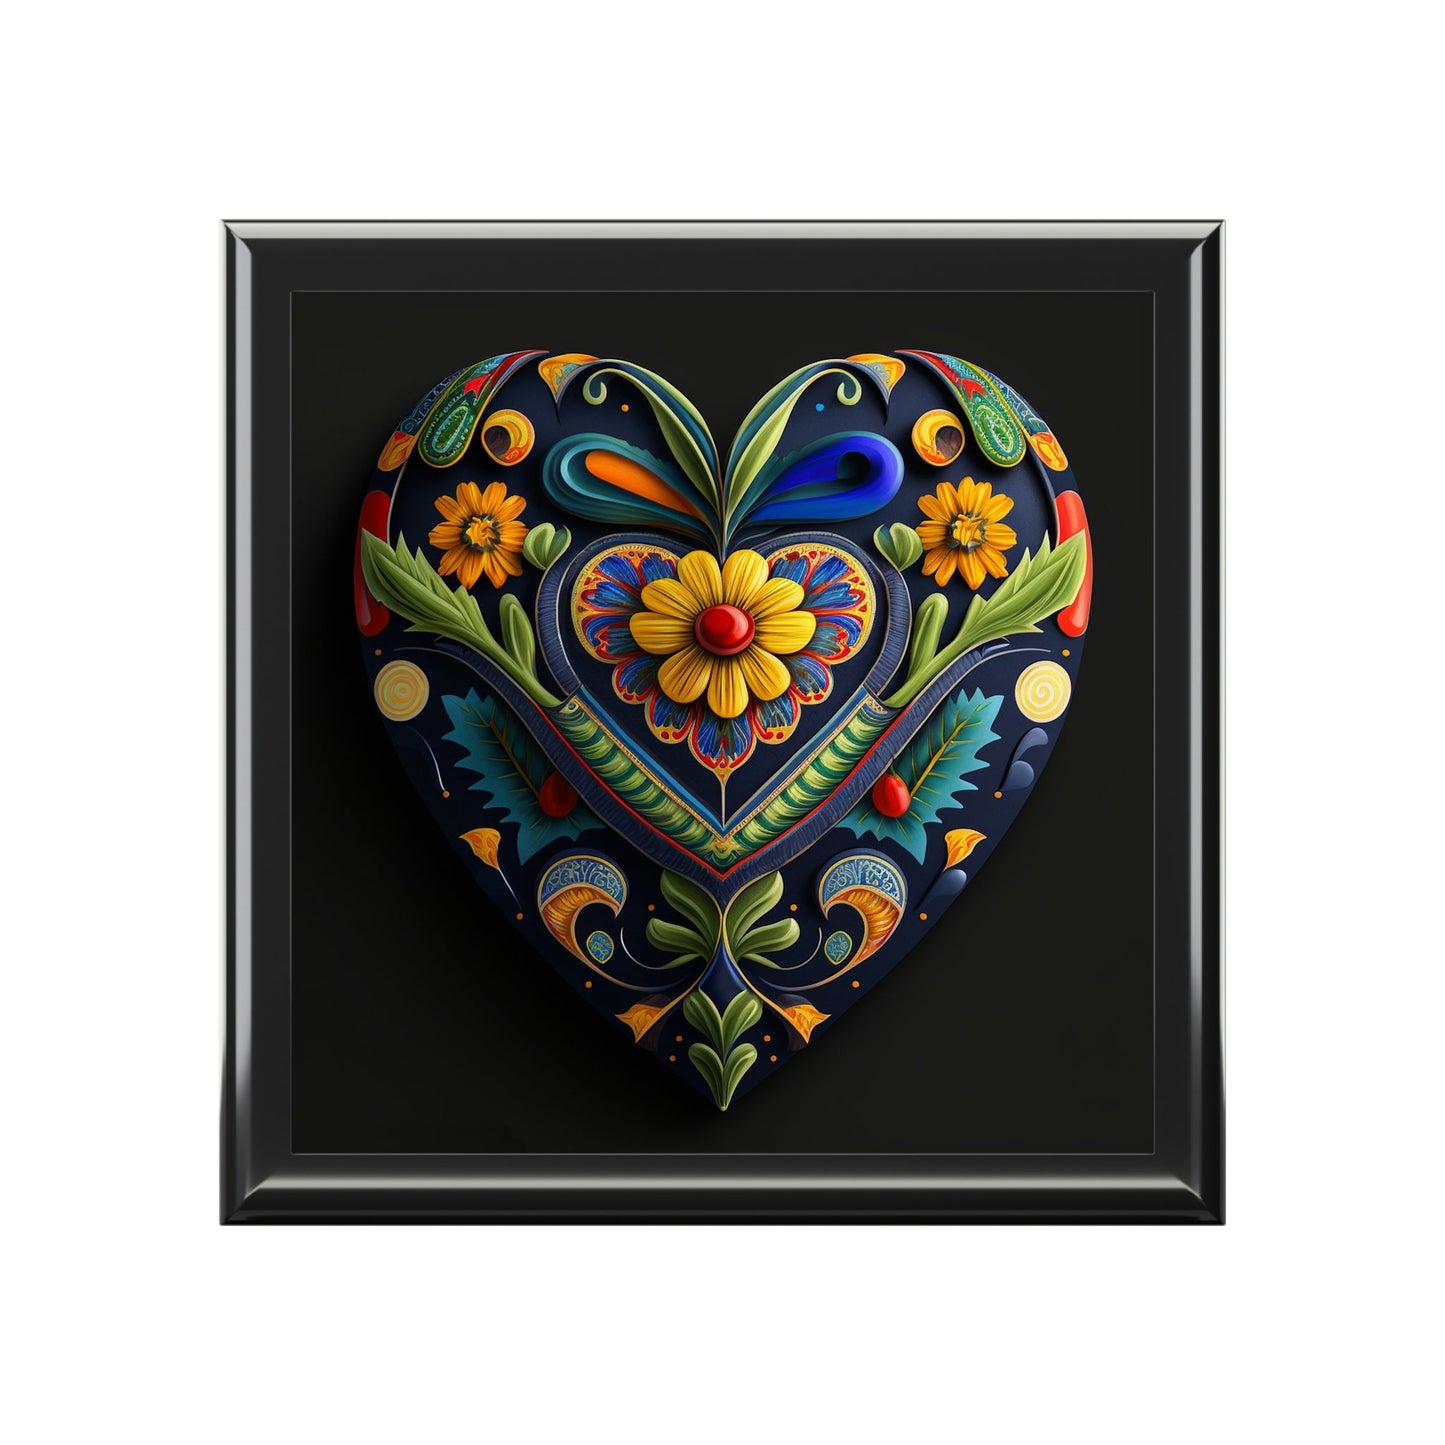 Talevera Heart Wood Keepsake Jewelry Box with Ceramic Tile Cover